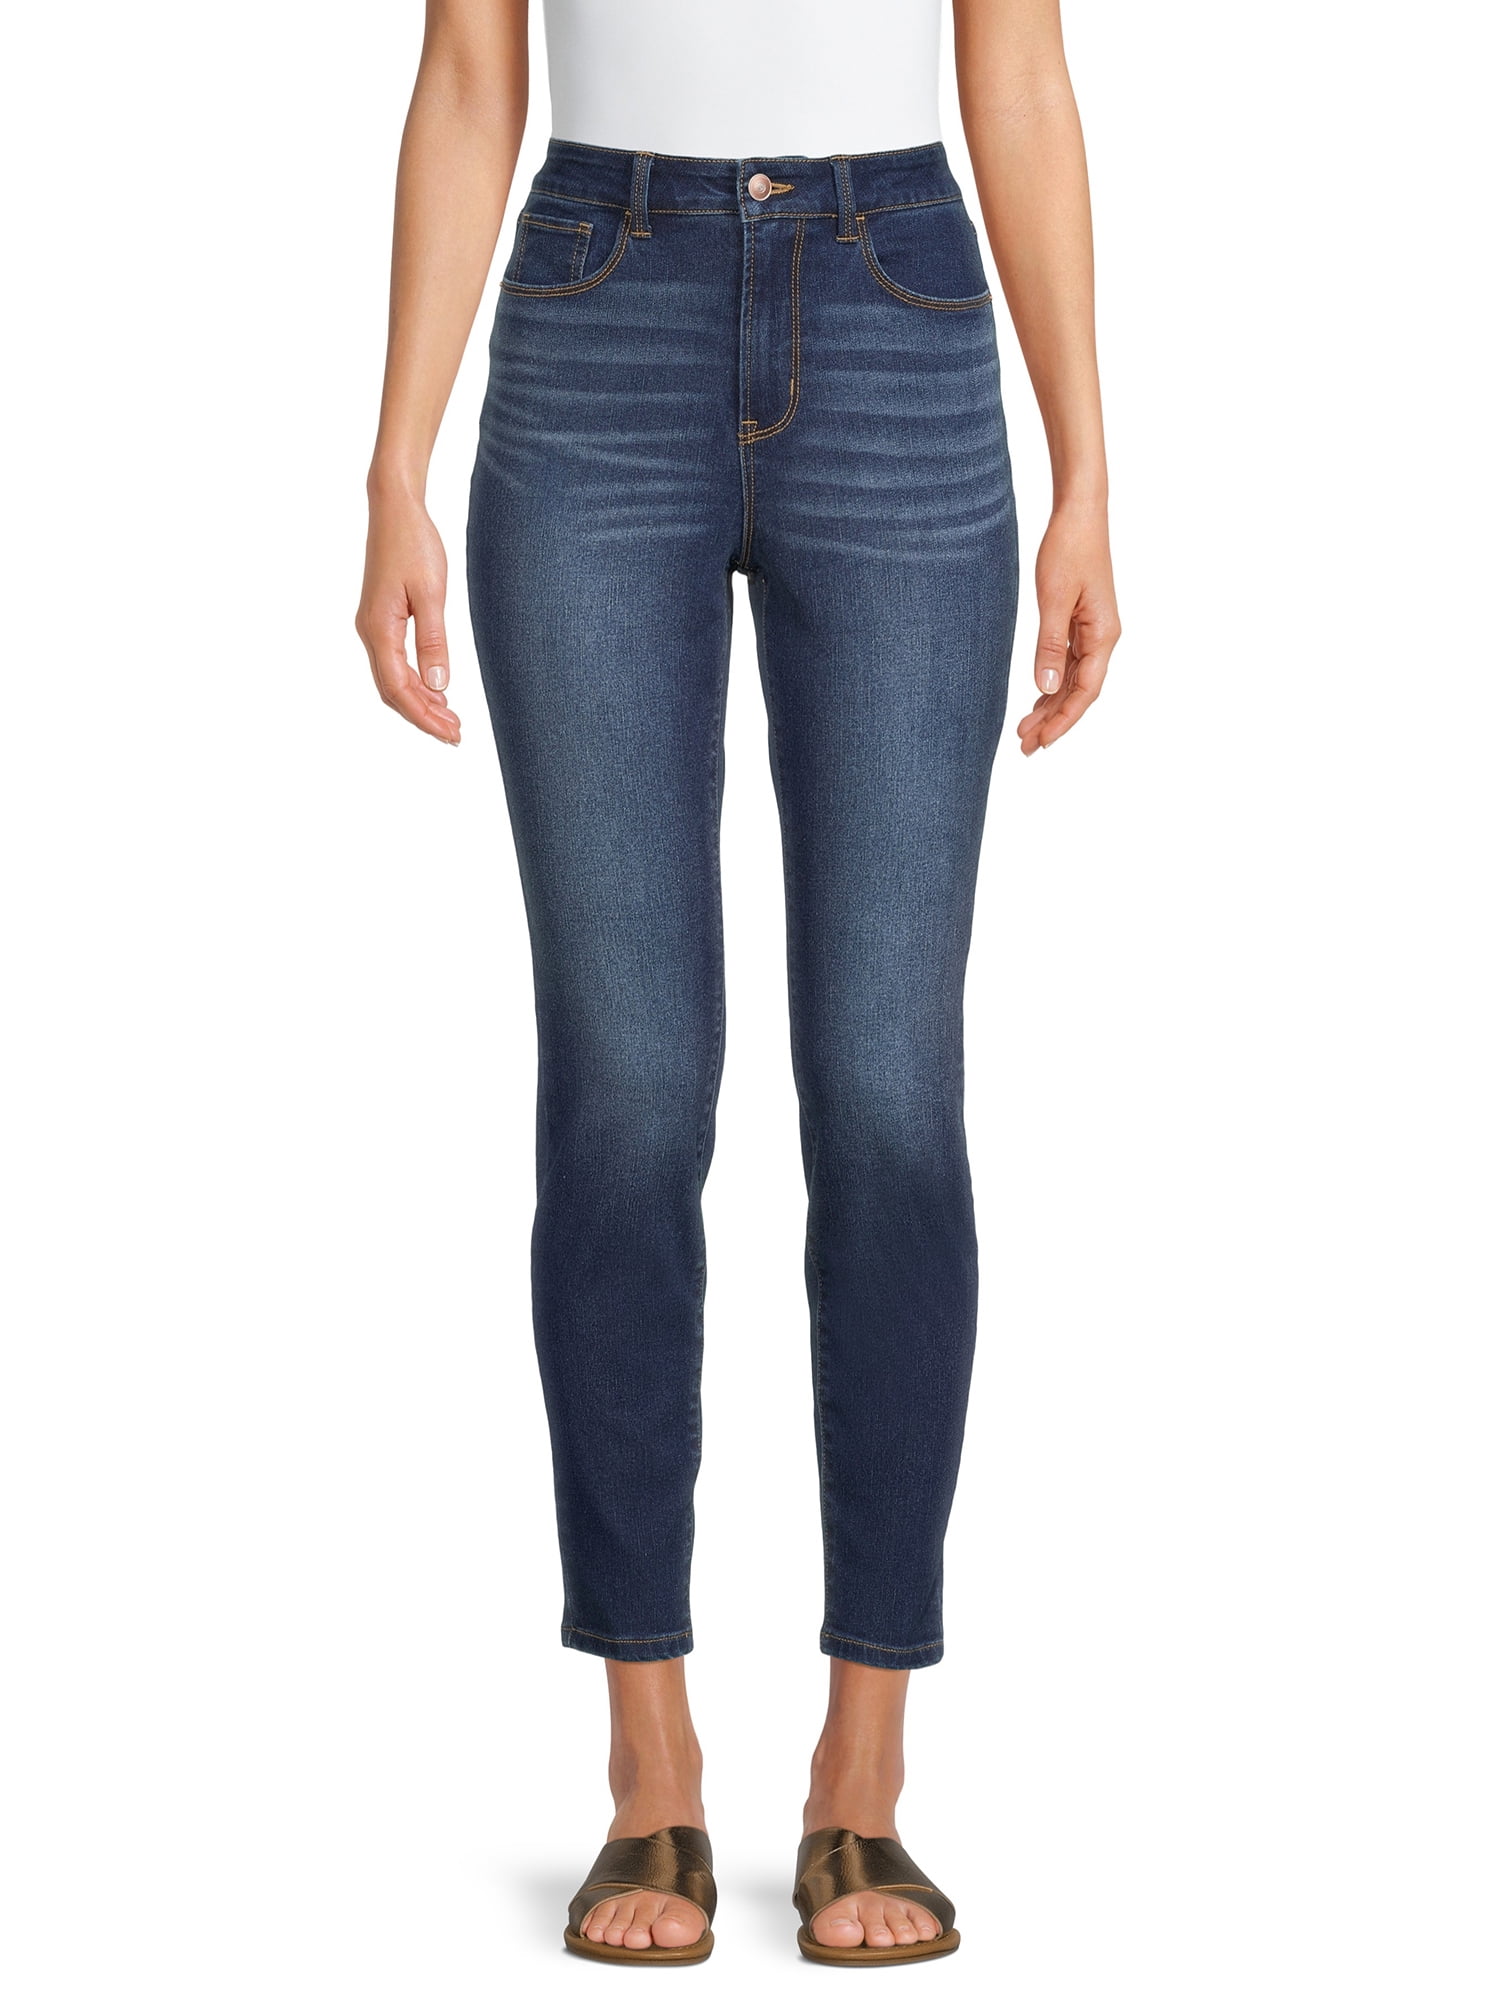 Buy Black Jeans & Jeggings for Women by Kassually Online | Ajio.com